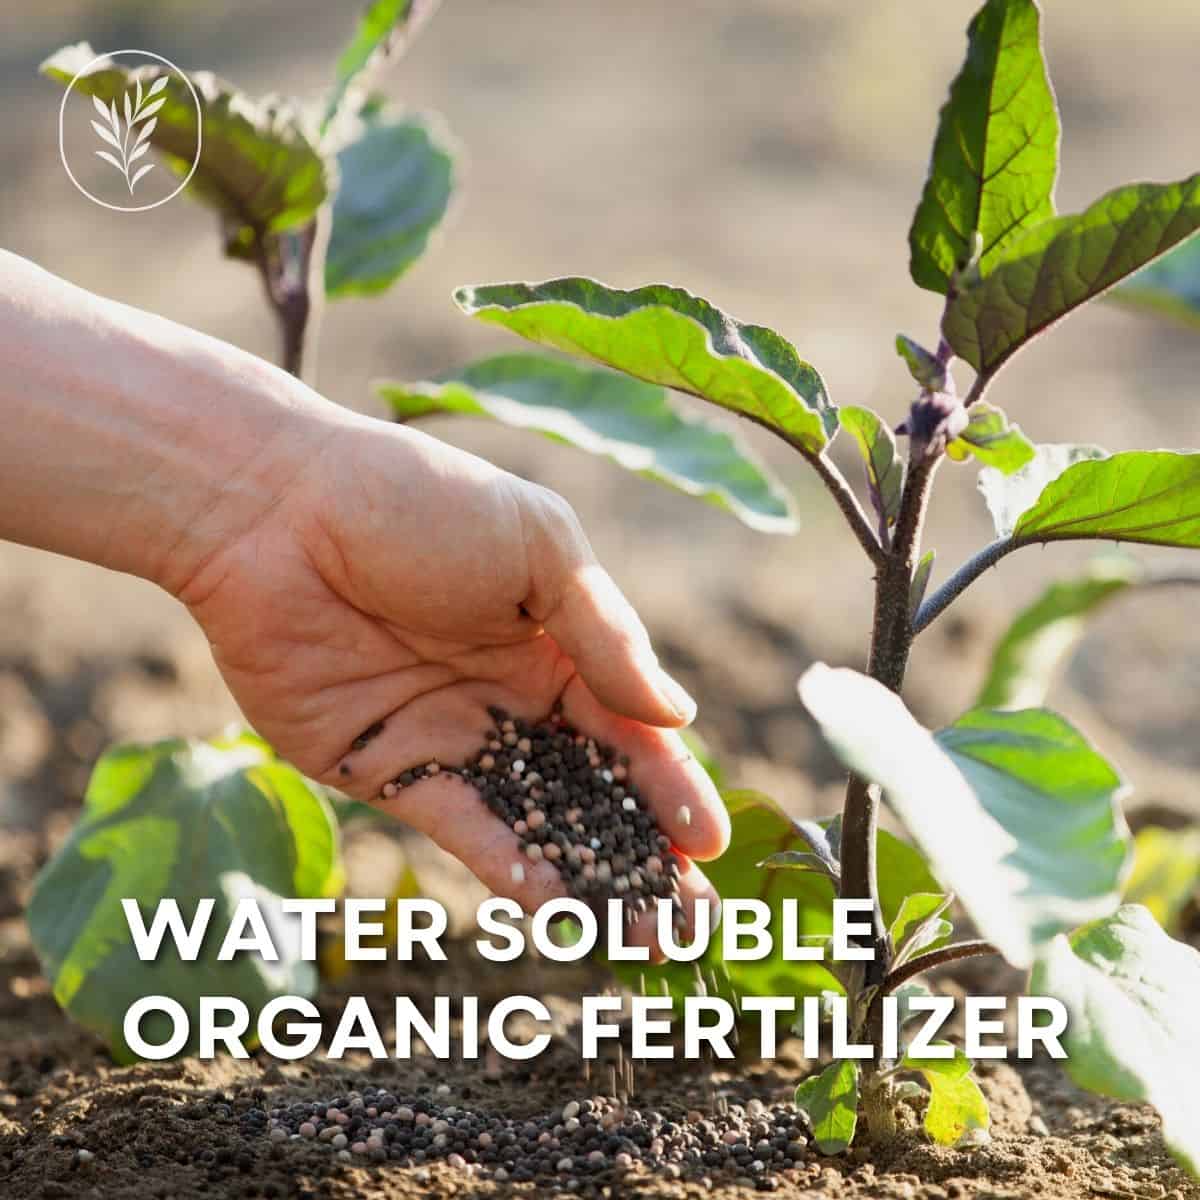 Water soluble organic fertilizer via @home4theharvest